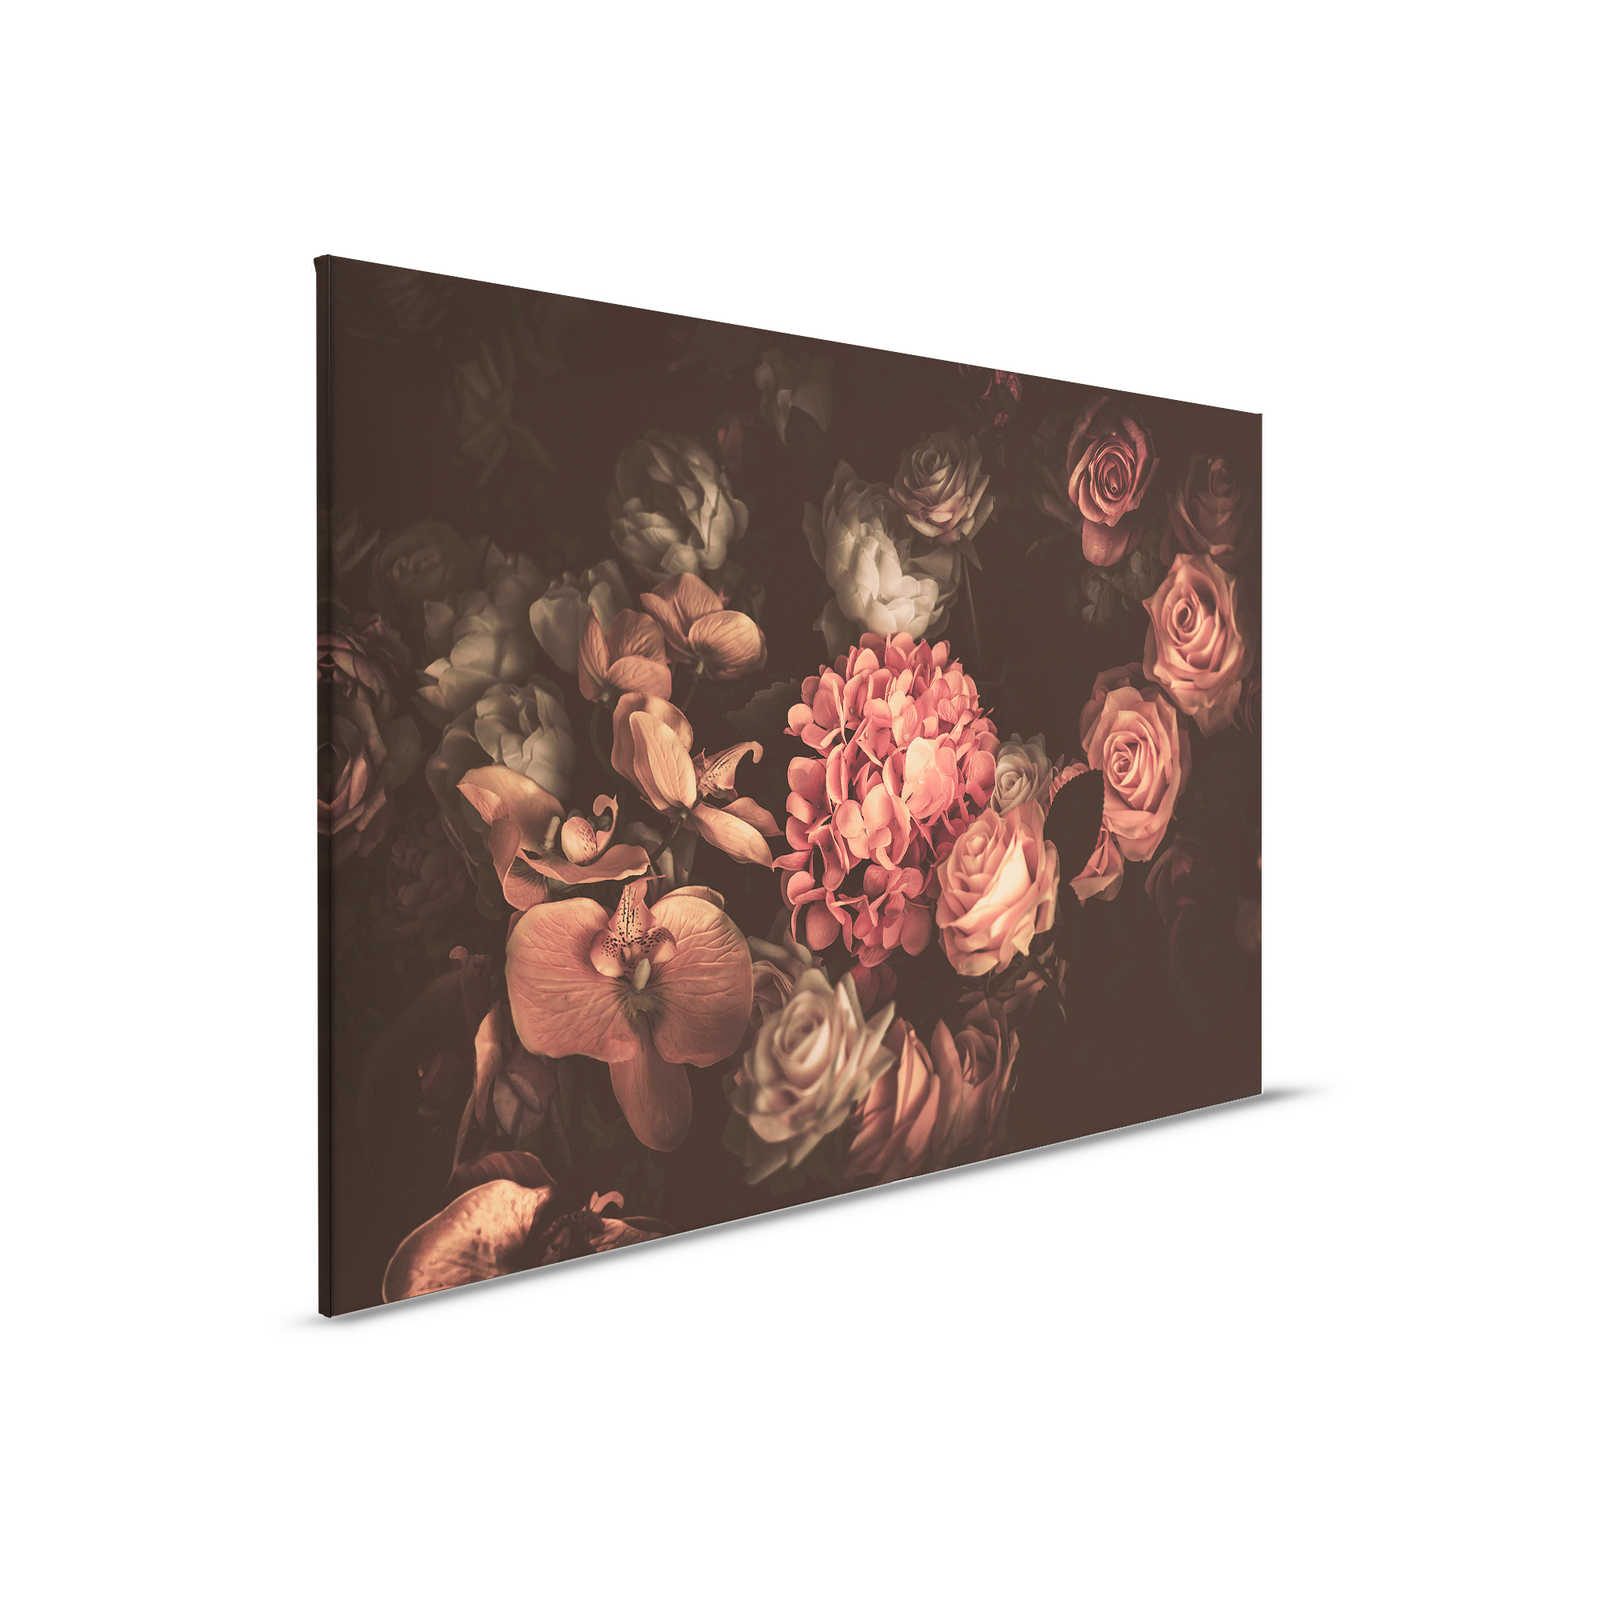         Romantic Canvas with Bouquet of Flowers - 0.90 m x 0.60 m
    